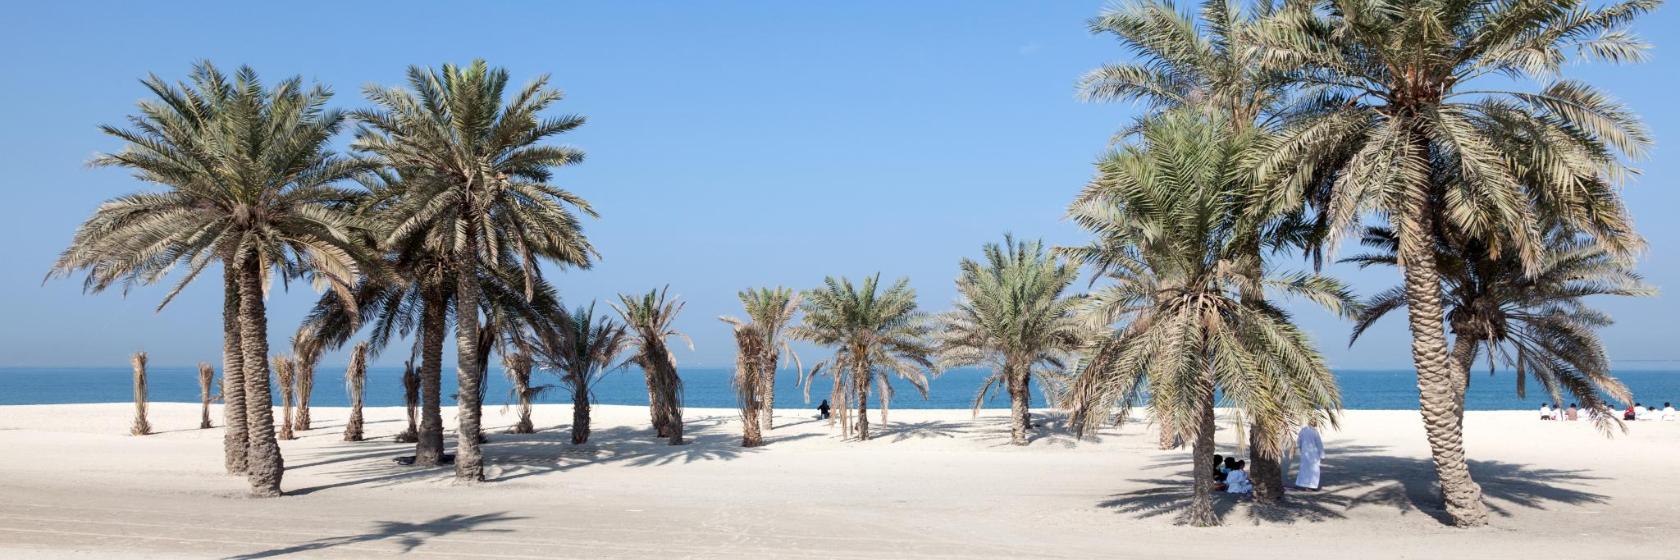 The Best Umm al-Quwain Hotels - Where To Stay in and around Umm al-Quwain, United Arab Emirates